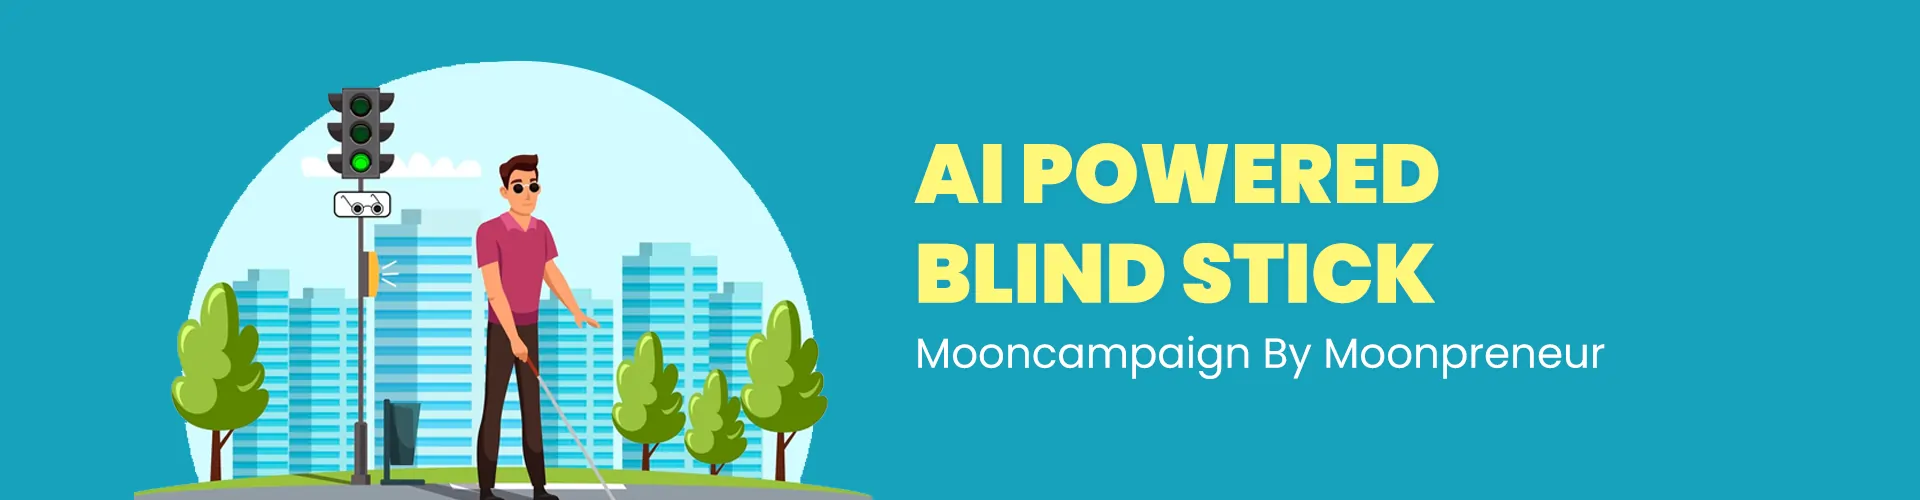 AI-Powered Blind Stick